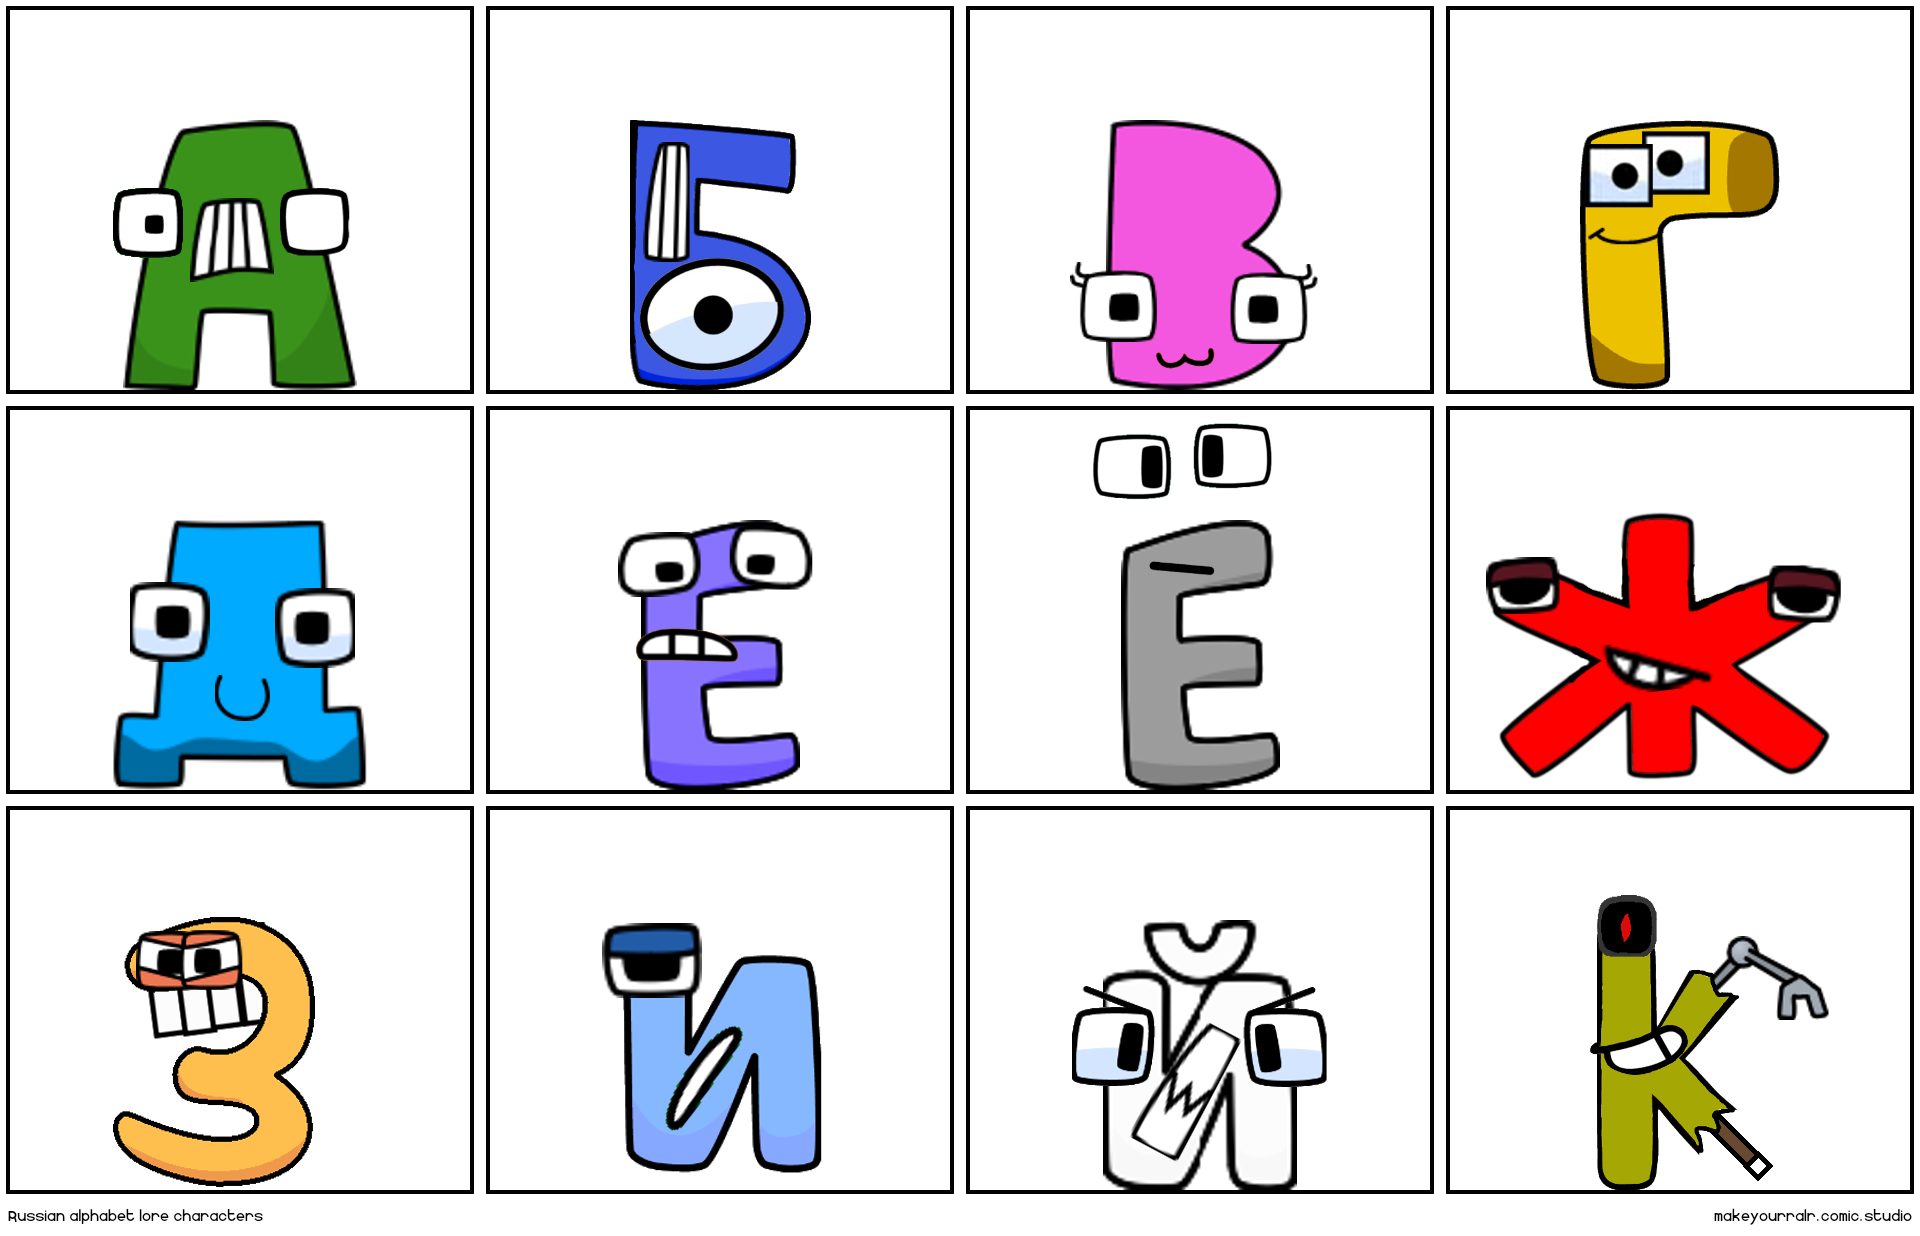 my russian alphabet lore comic!!! - Comic Studio